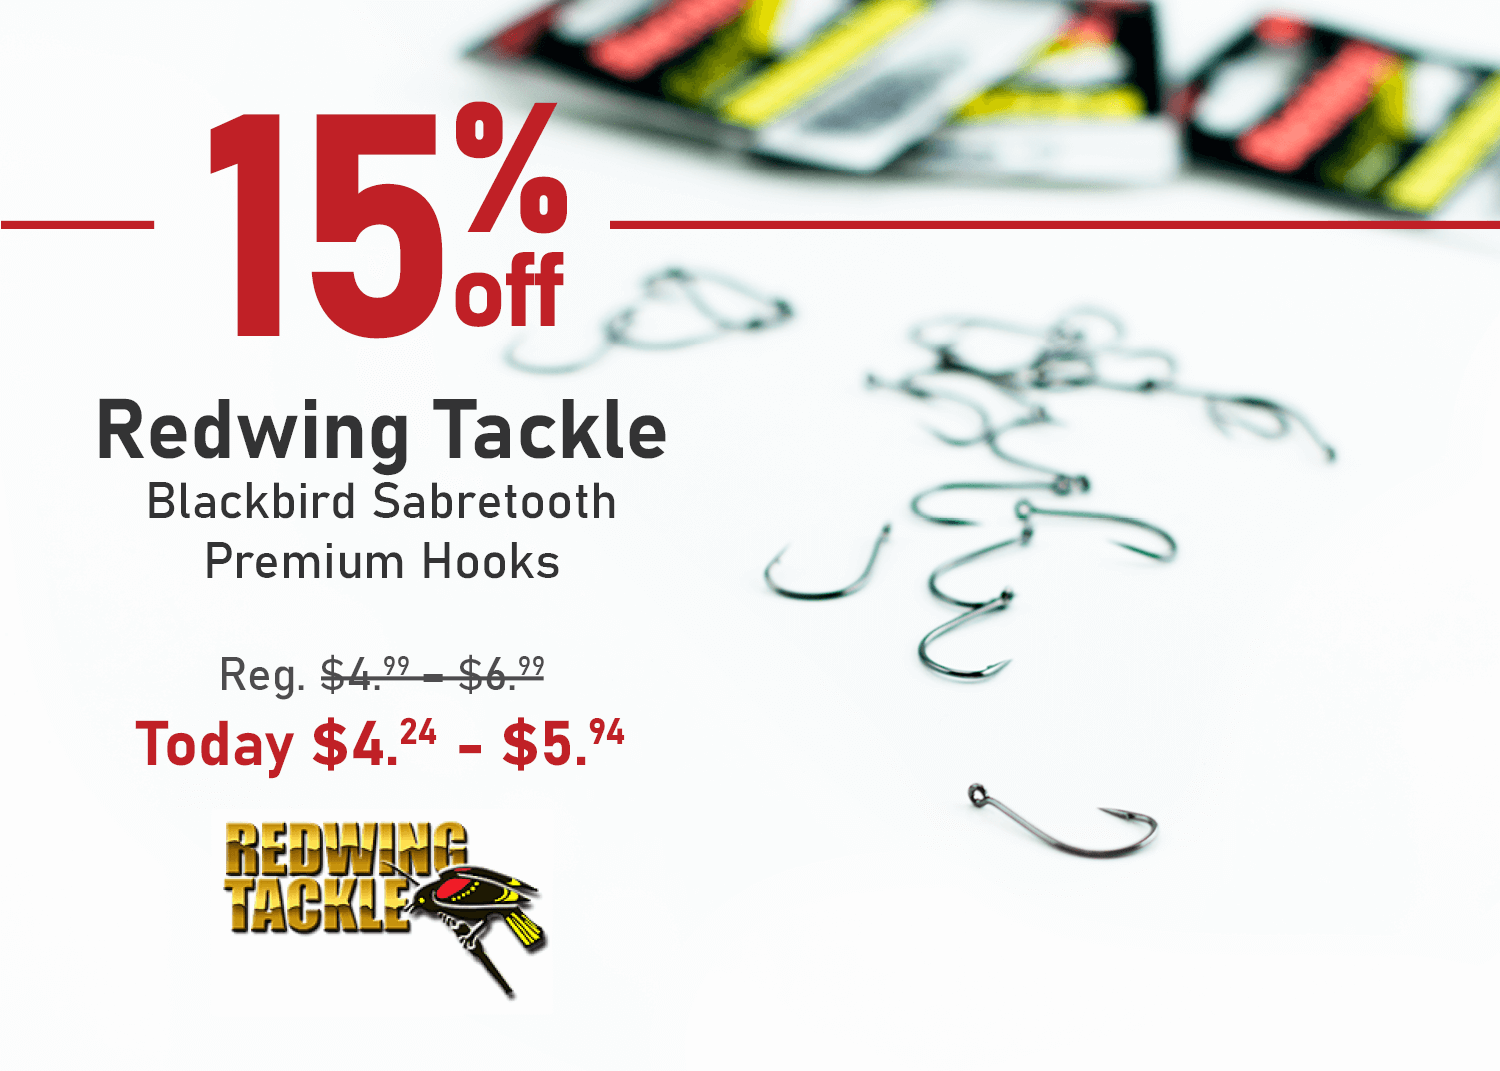 Save 15% on Redwing Tackle Blackbird Sabretooth Premium Hooks